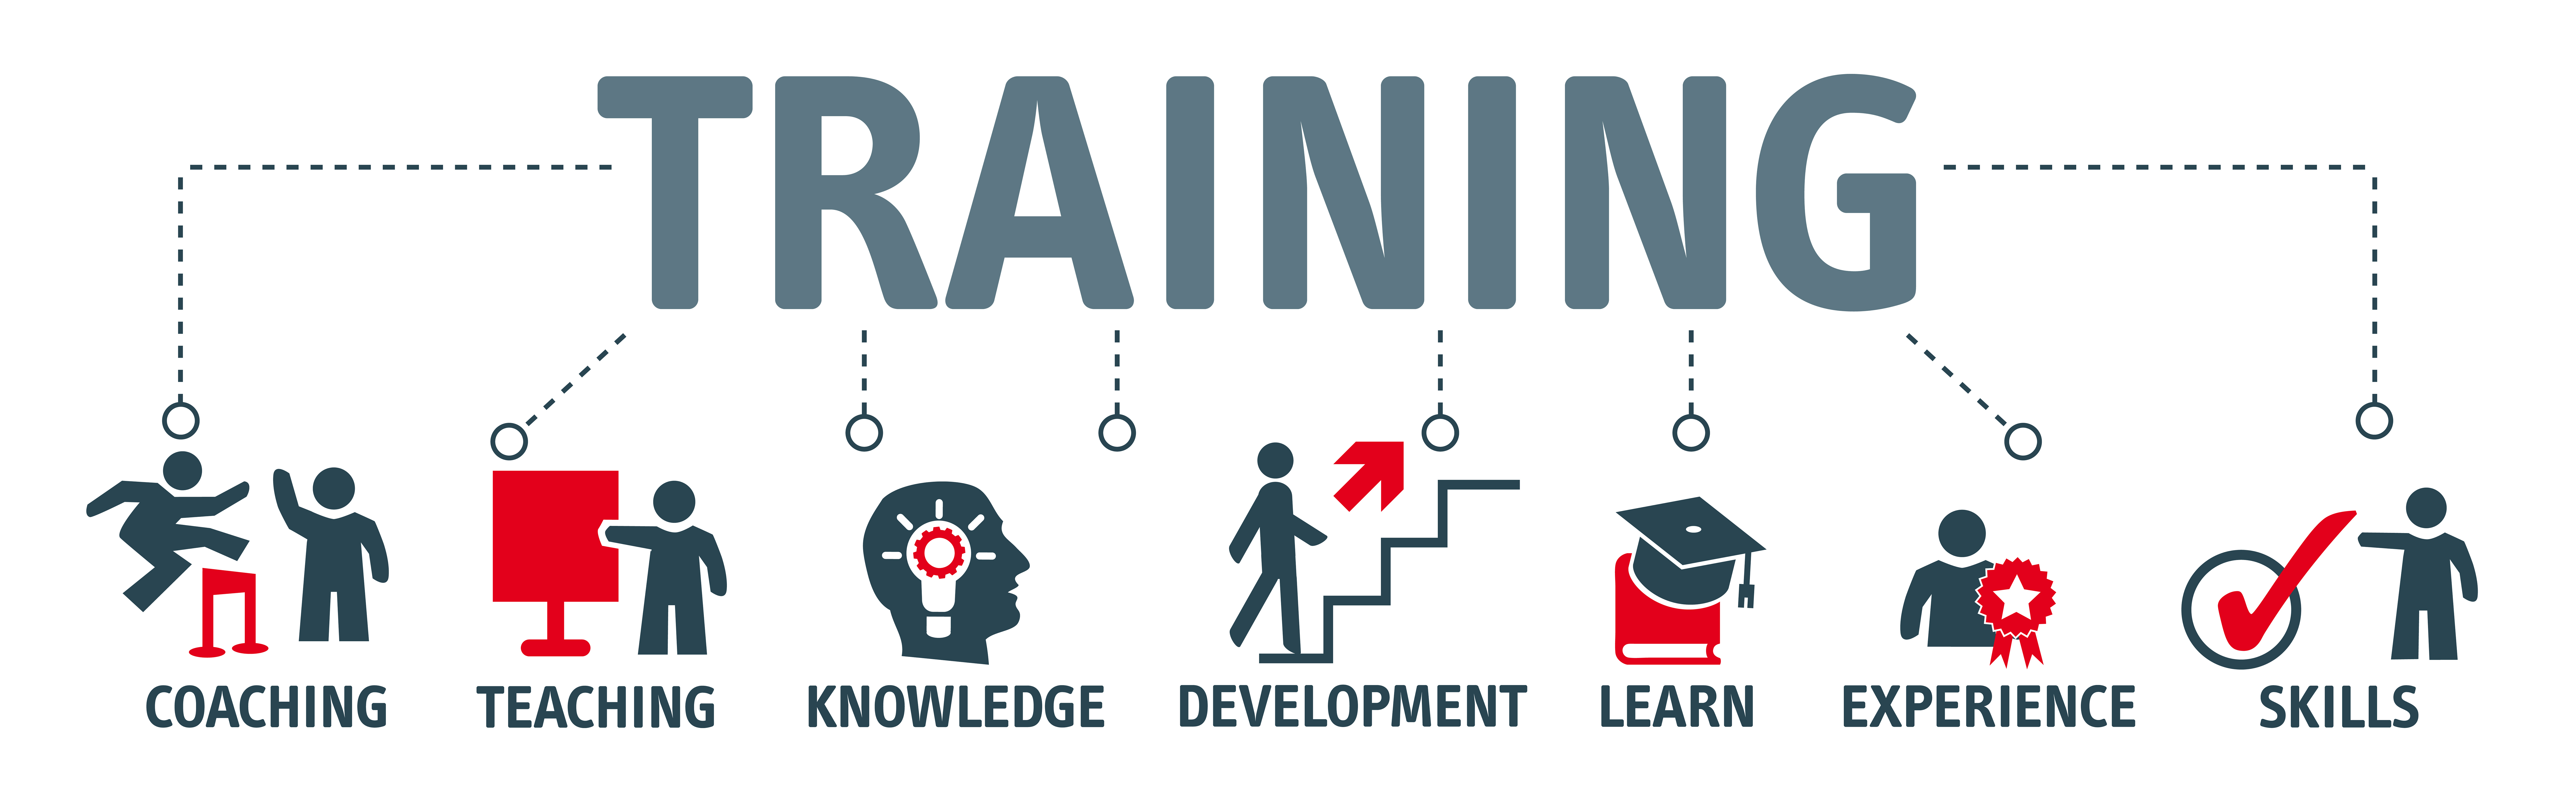 training and development jobs education